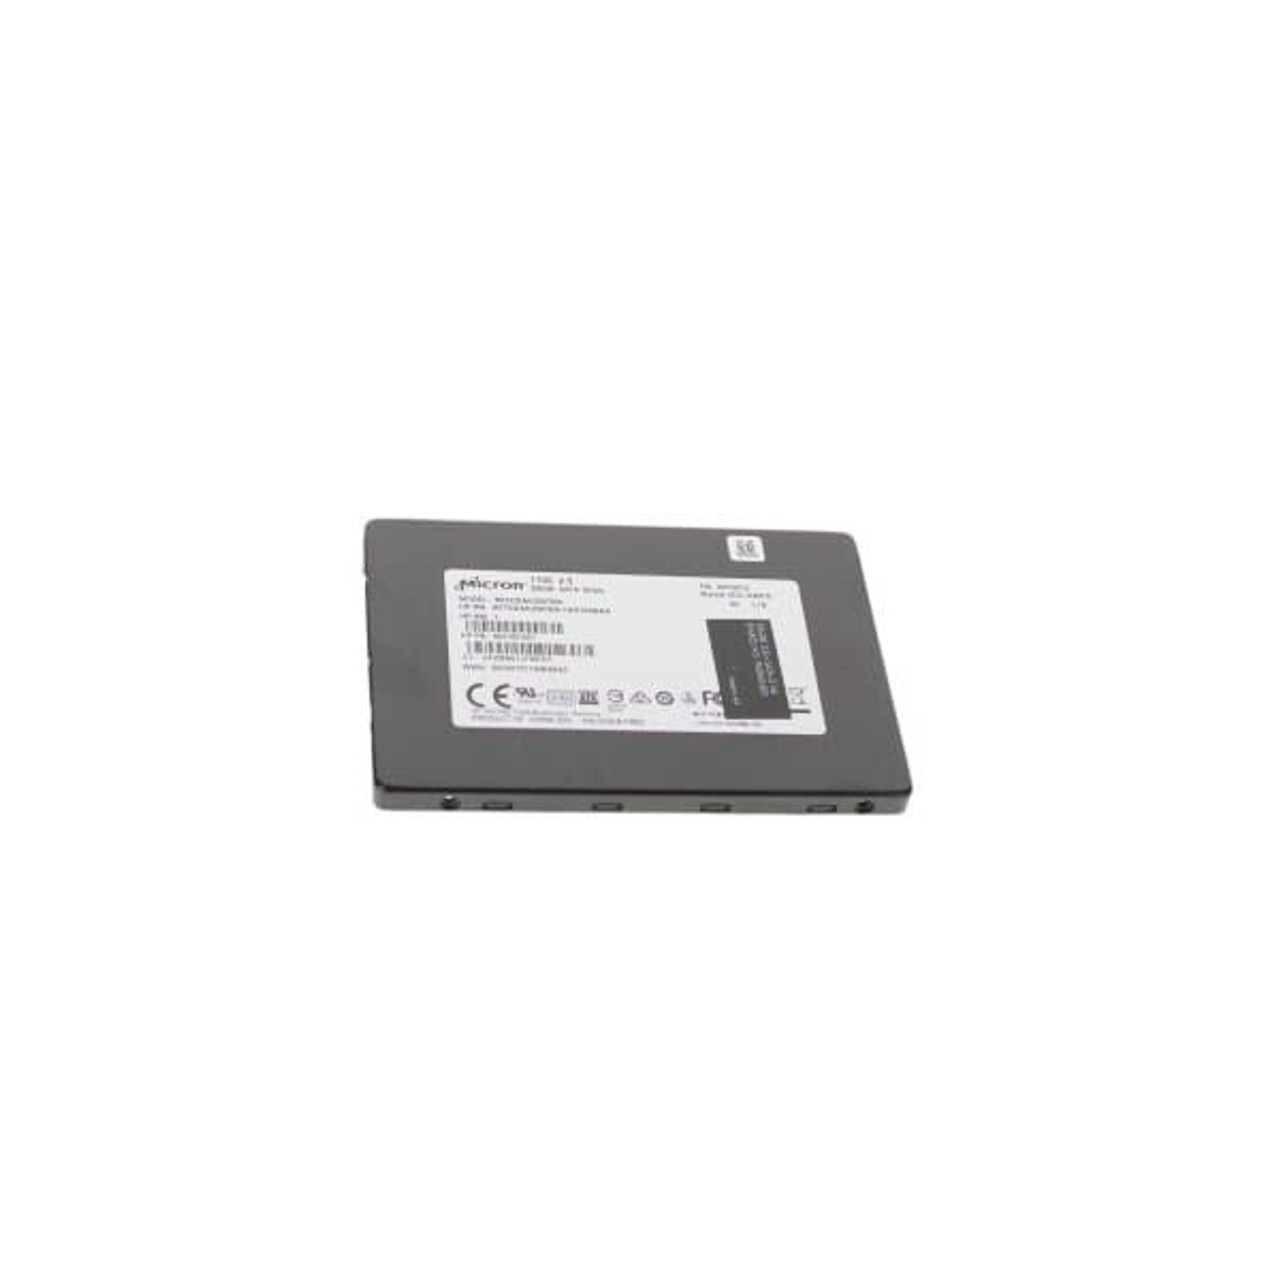 HP 916860-001 256GB SATA 6GB 2.5" solid state drive zxy